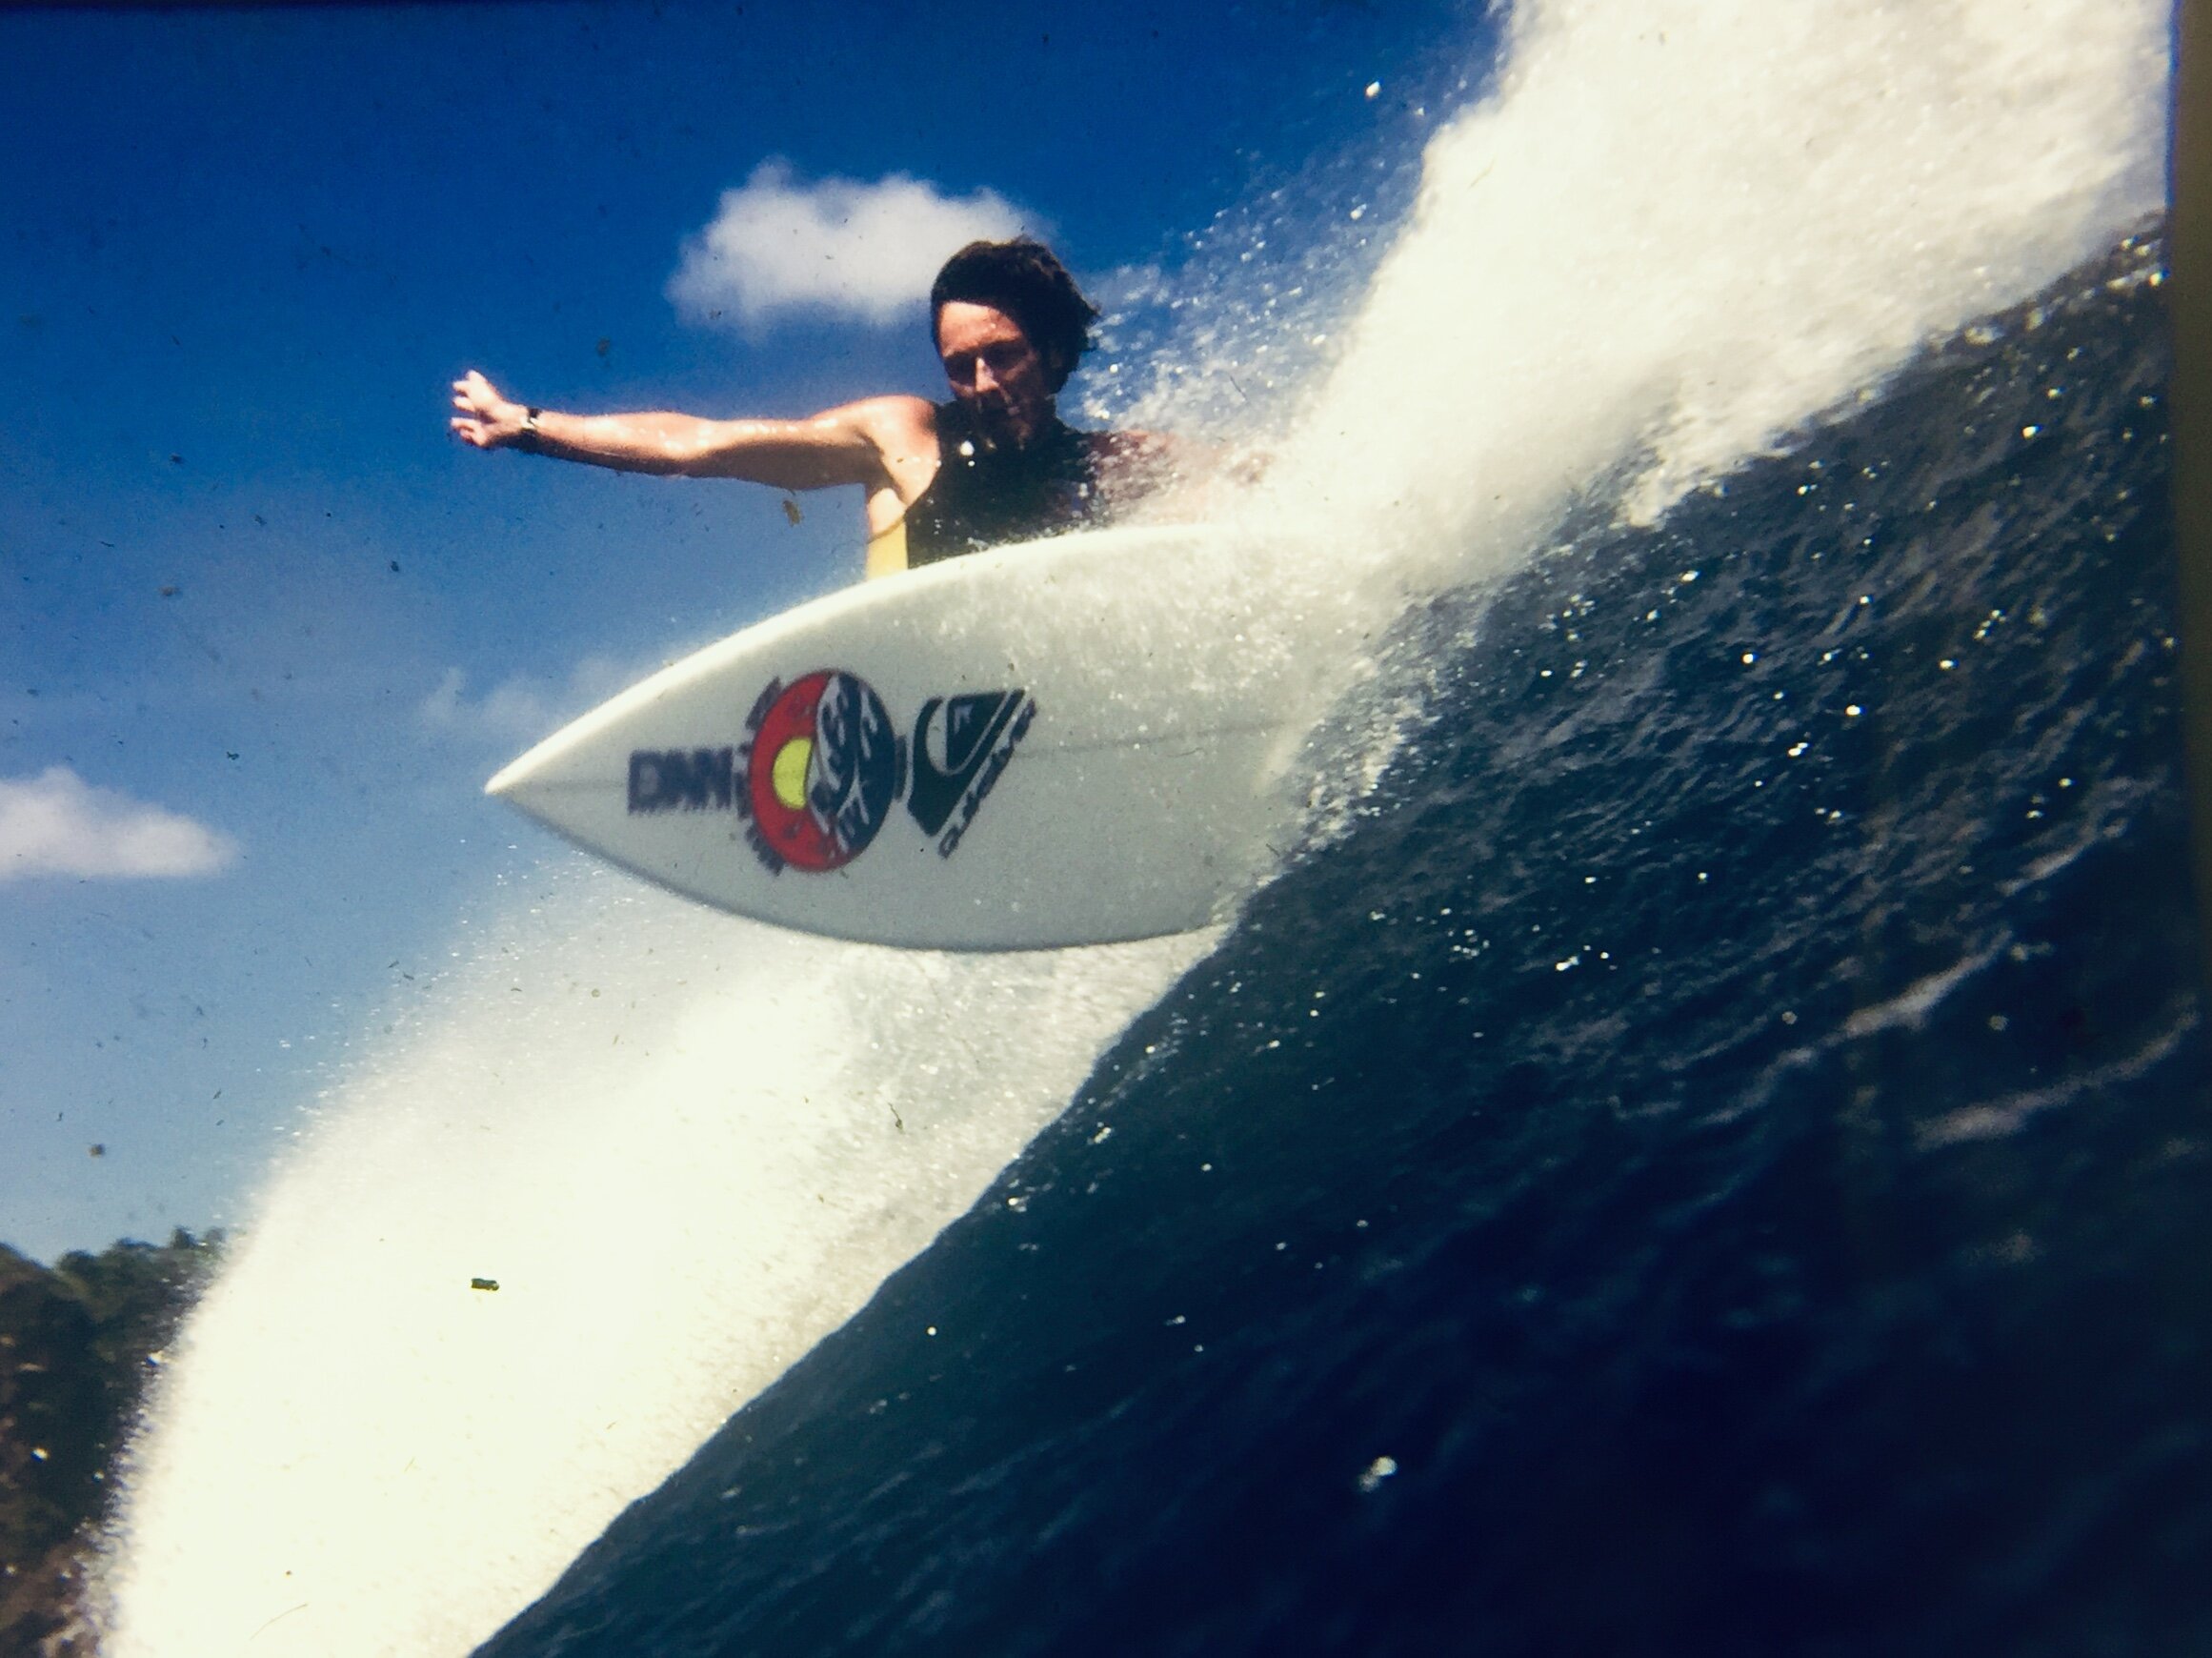  Hawaiian Mickey Neilson scored the very first cover of Surfing Life magazine with this rare Uluwatu water shot 